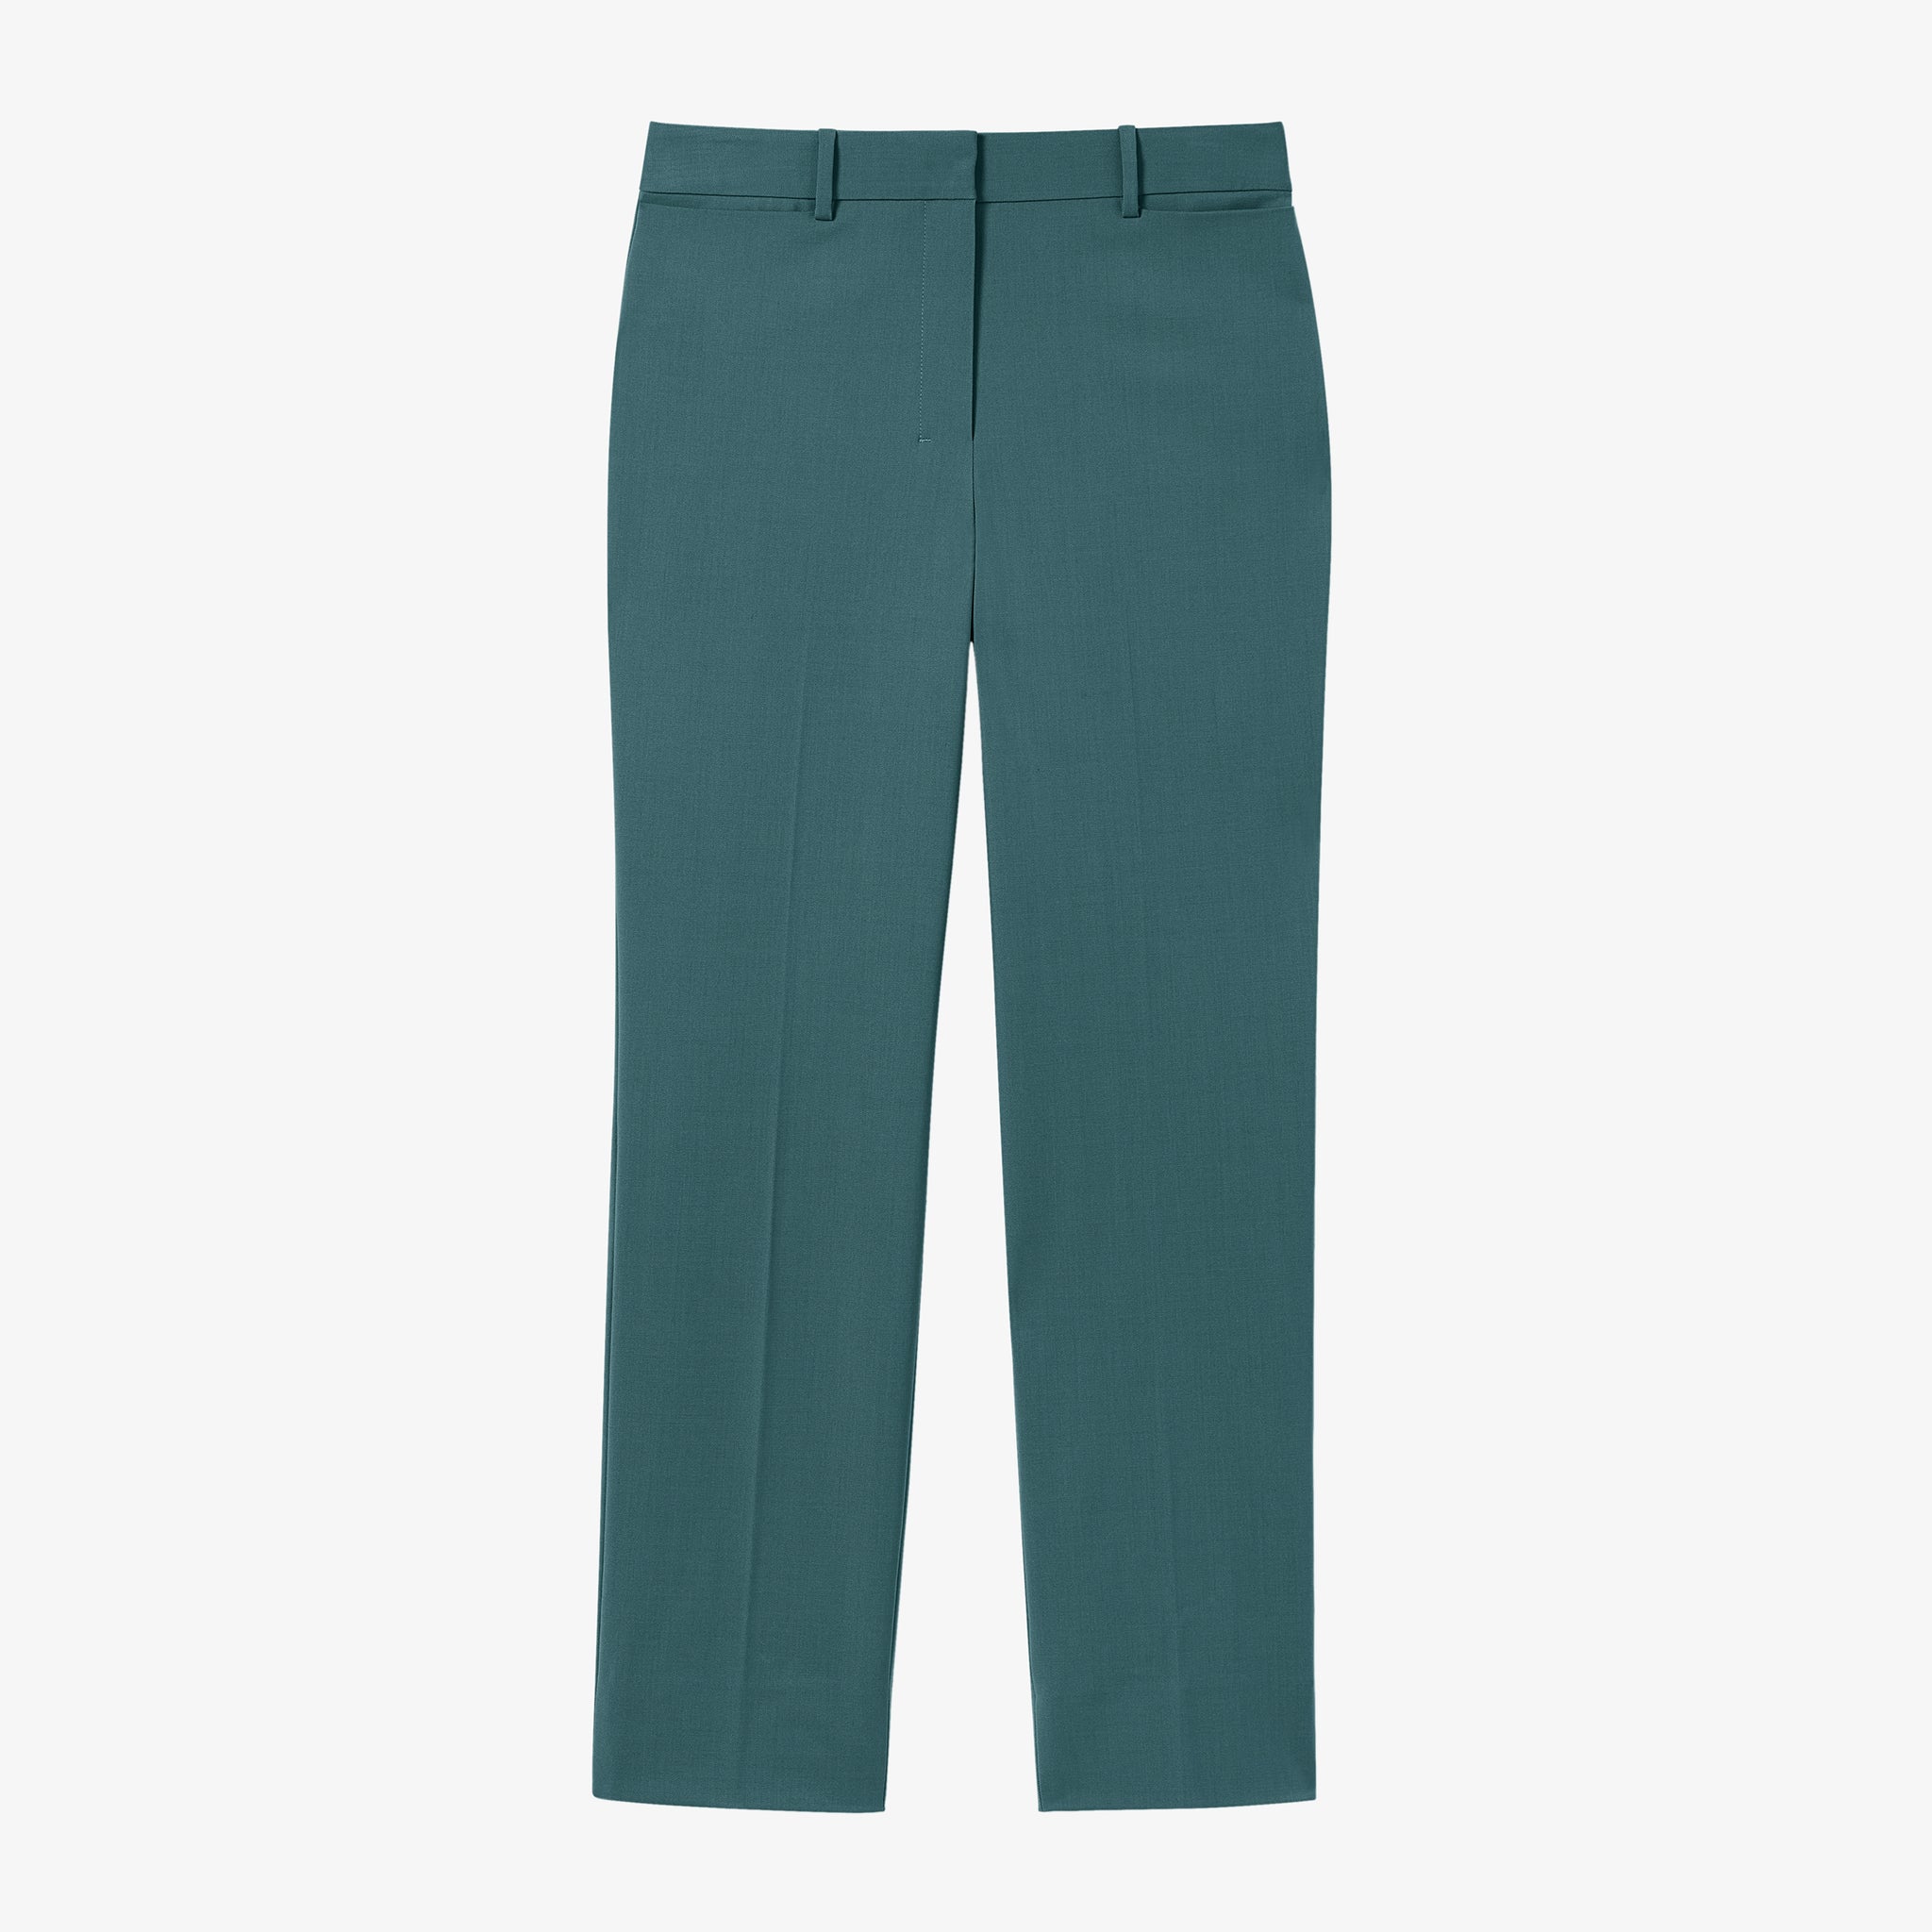 packshot image of the smith pants in blue jade